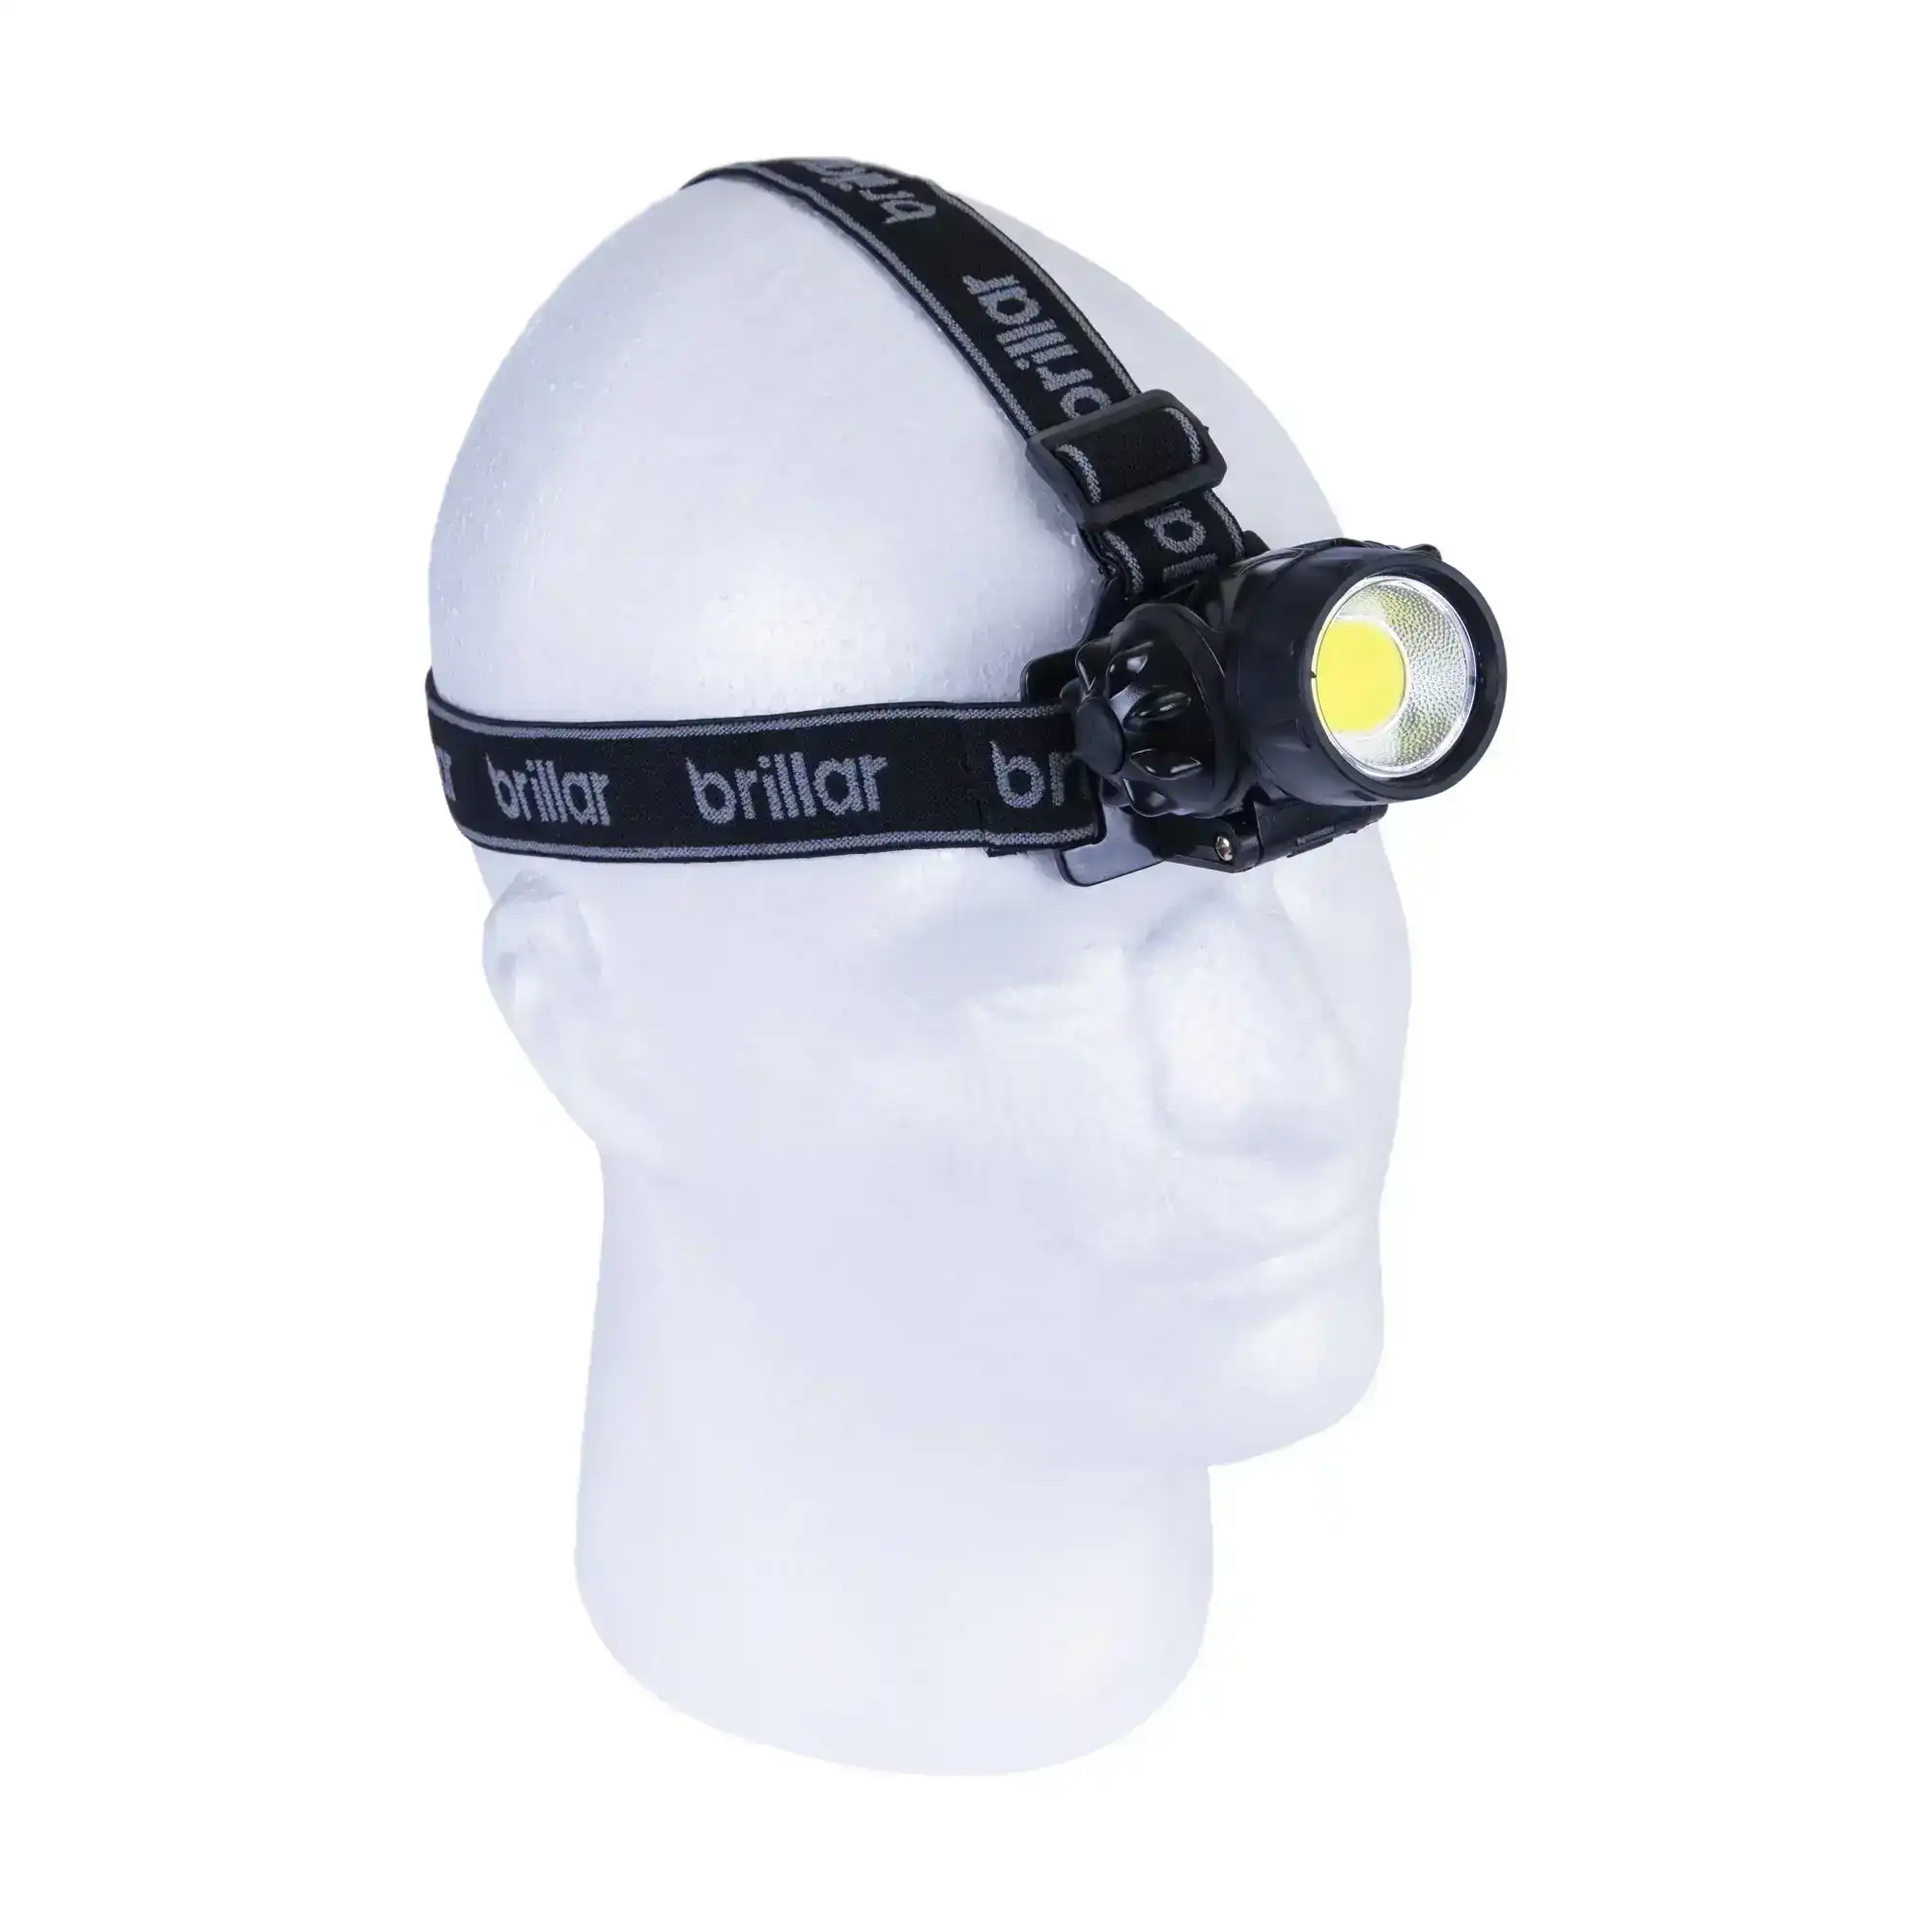 Brillar 3 Mode Headlamp - Black